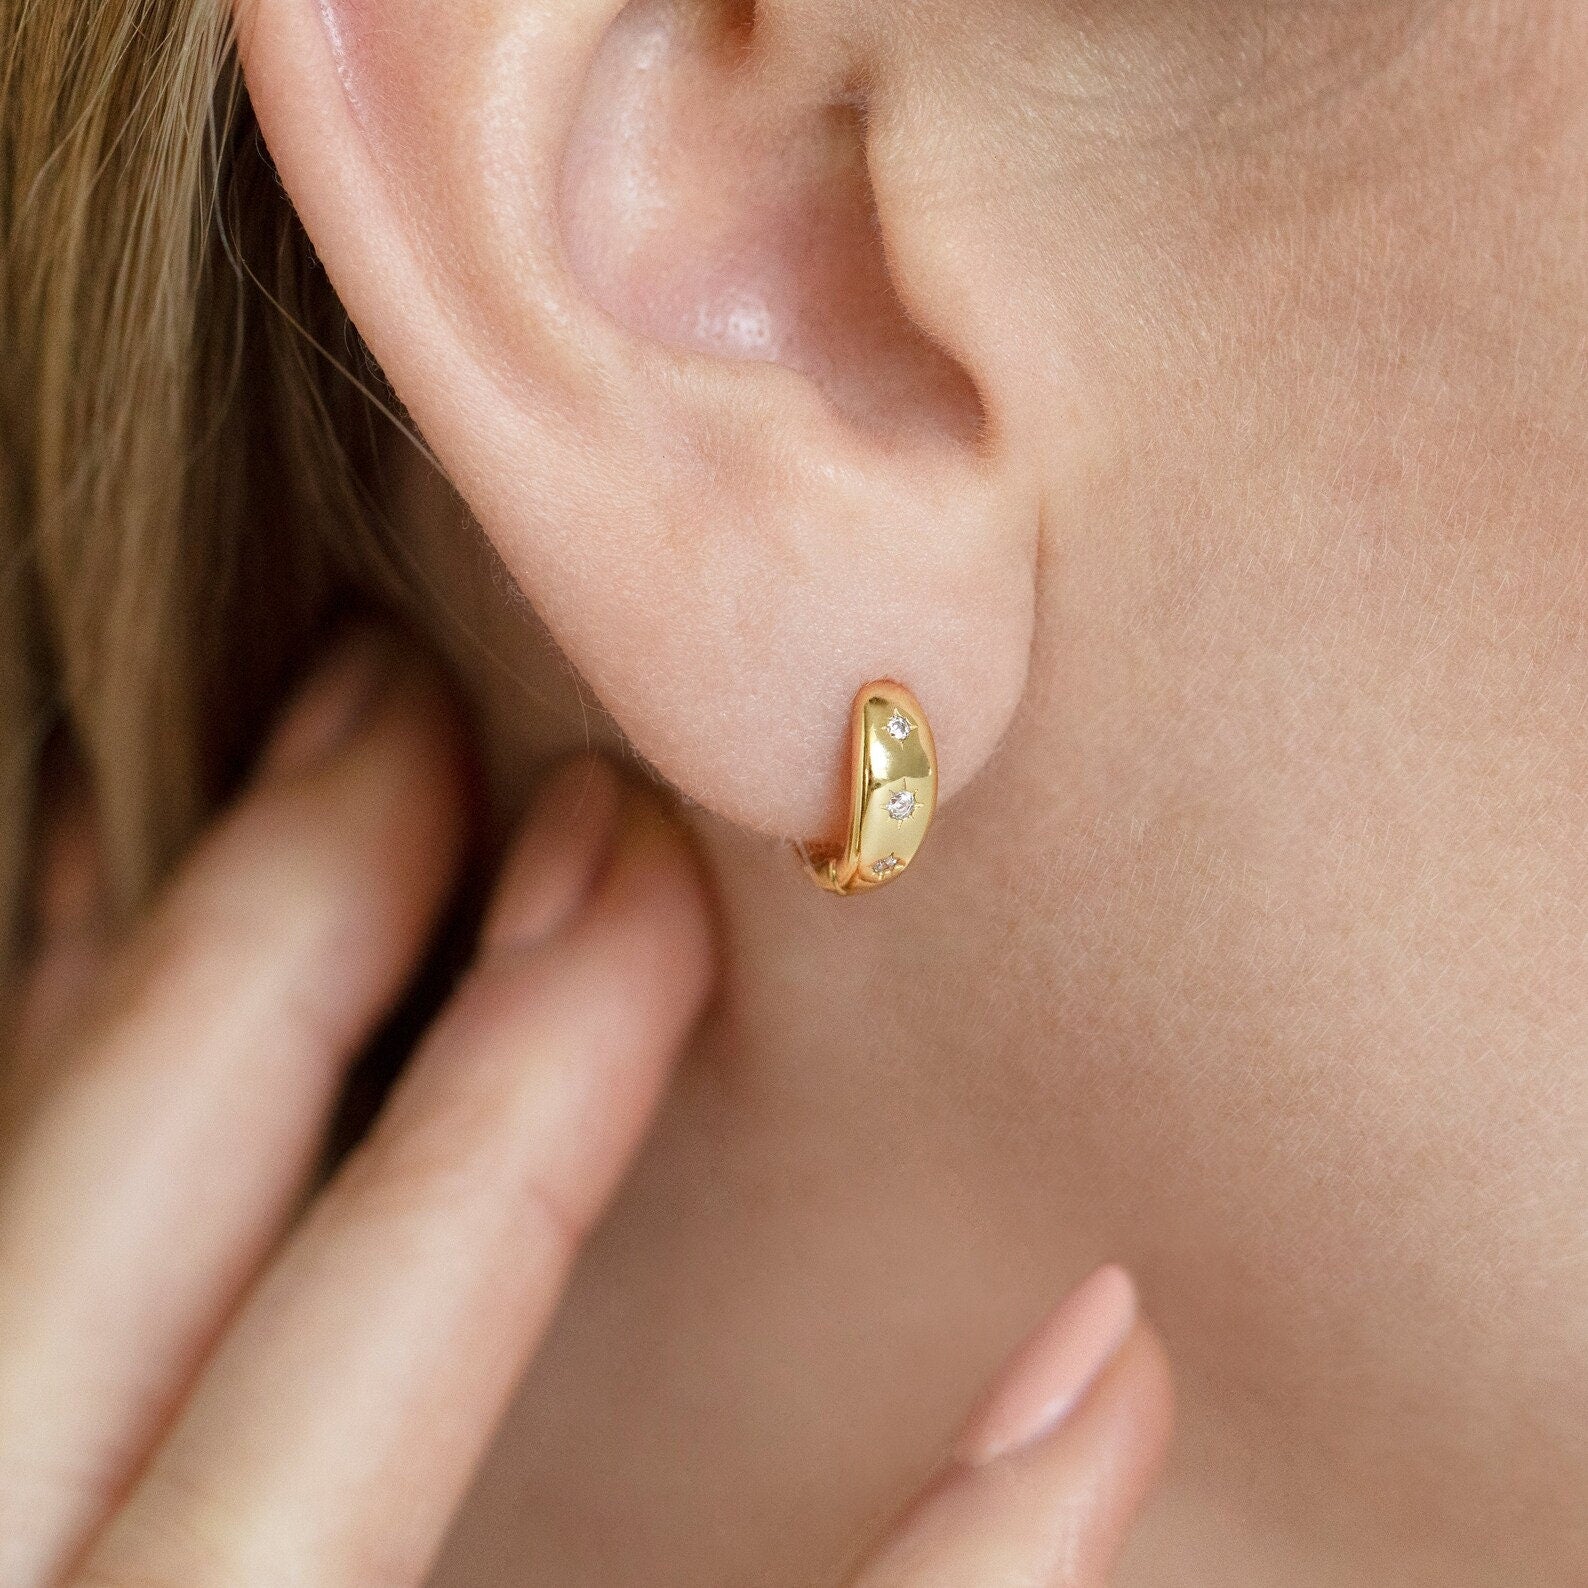 LIBERTY // Small gold chunky hoop earrings